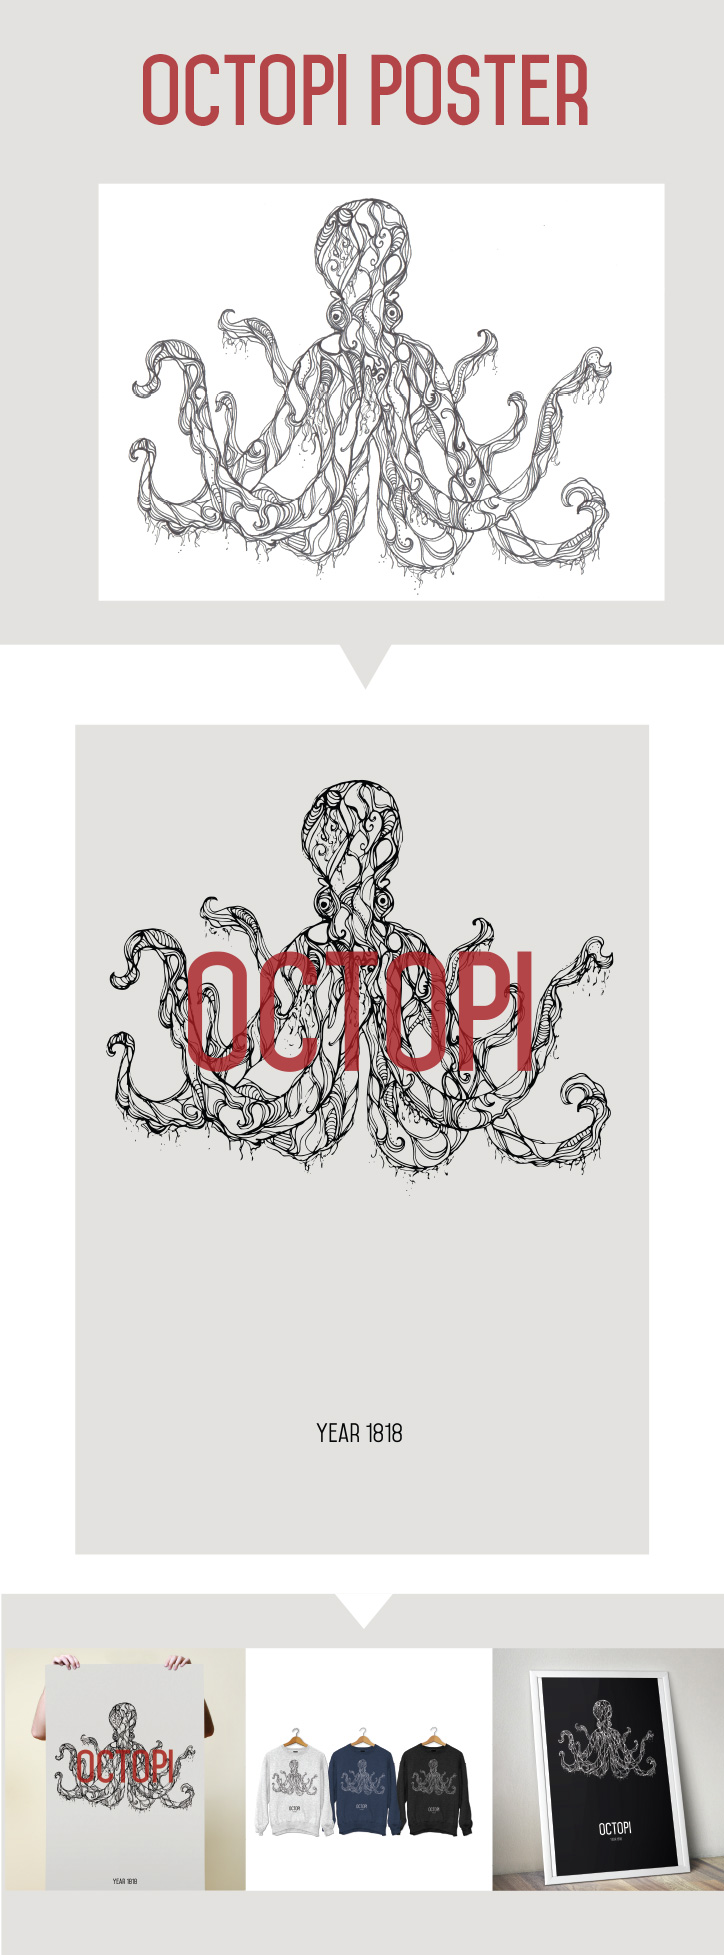 wood-tirzah-octopi-poster.jpg